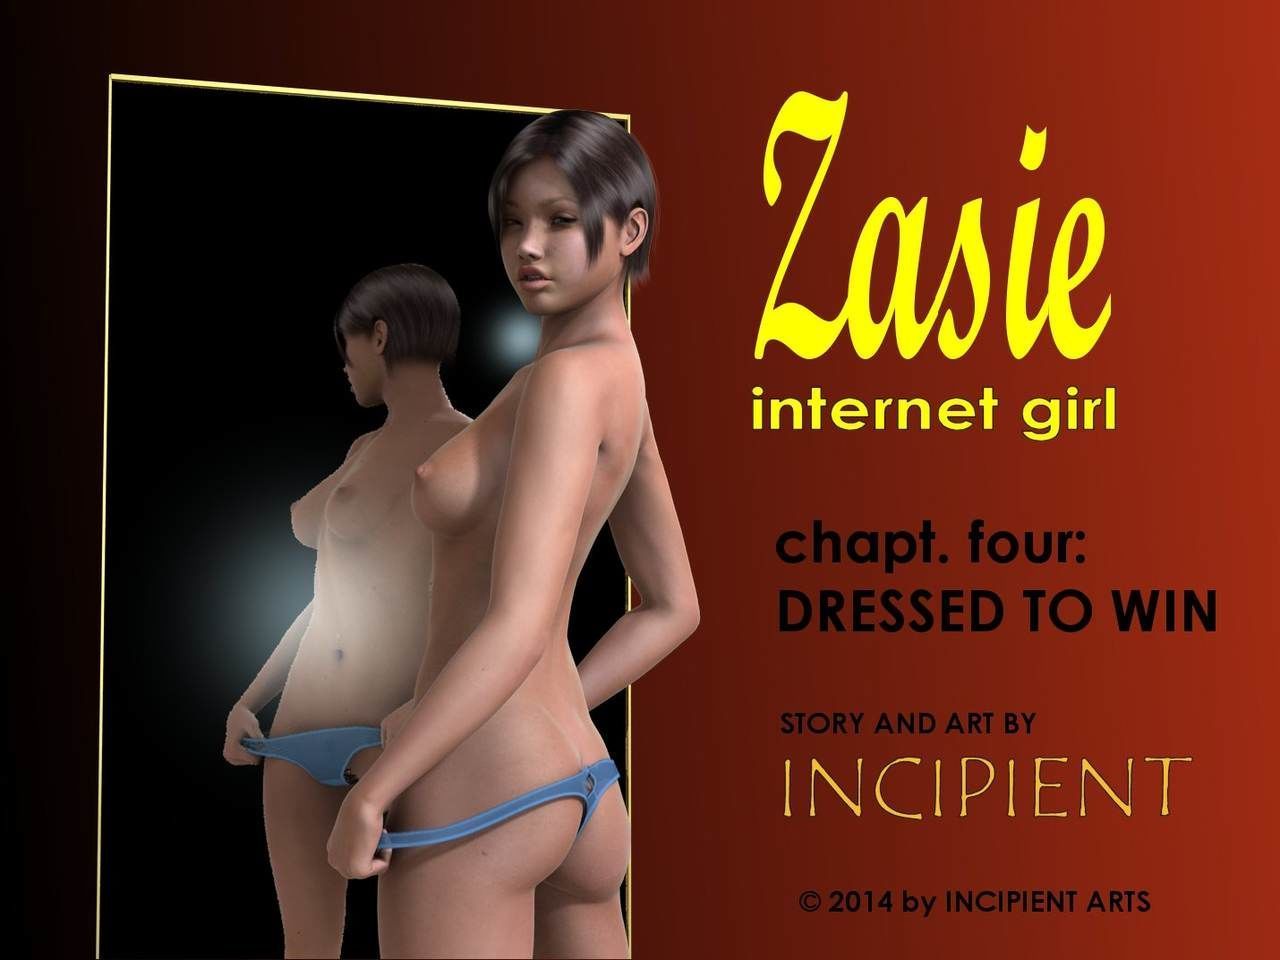 [incipient] zasie อินเทอร์เน็ต ผู้หญิง ch. 4: แต่งตัว ต้อง ชนะ